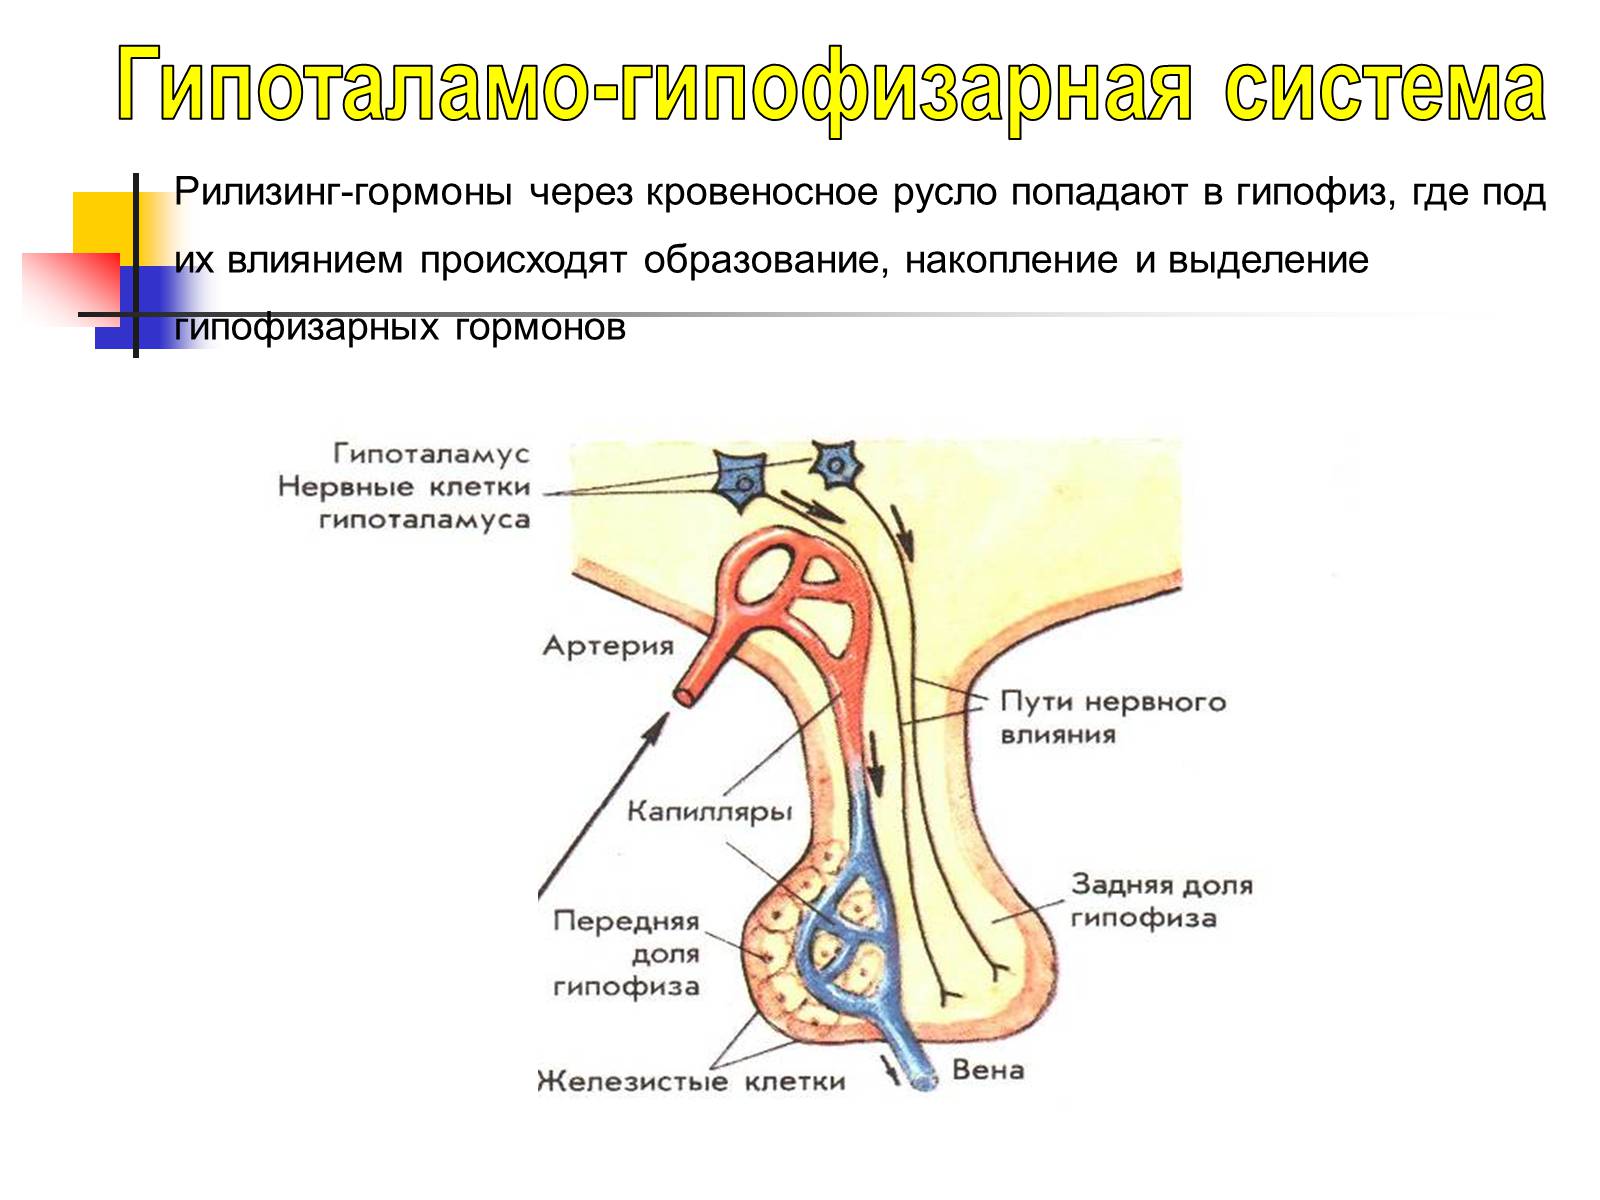 Гипофиз влияние гормона. Гипоталамо-гипофизарная система гормоны гипофиза. Гипоталамо-гипофизарная система функции. Гипоталамо-гипофиз система схема. Система гипоталамус гипофиз.